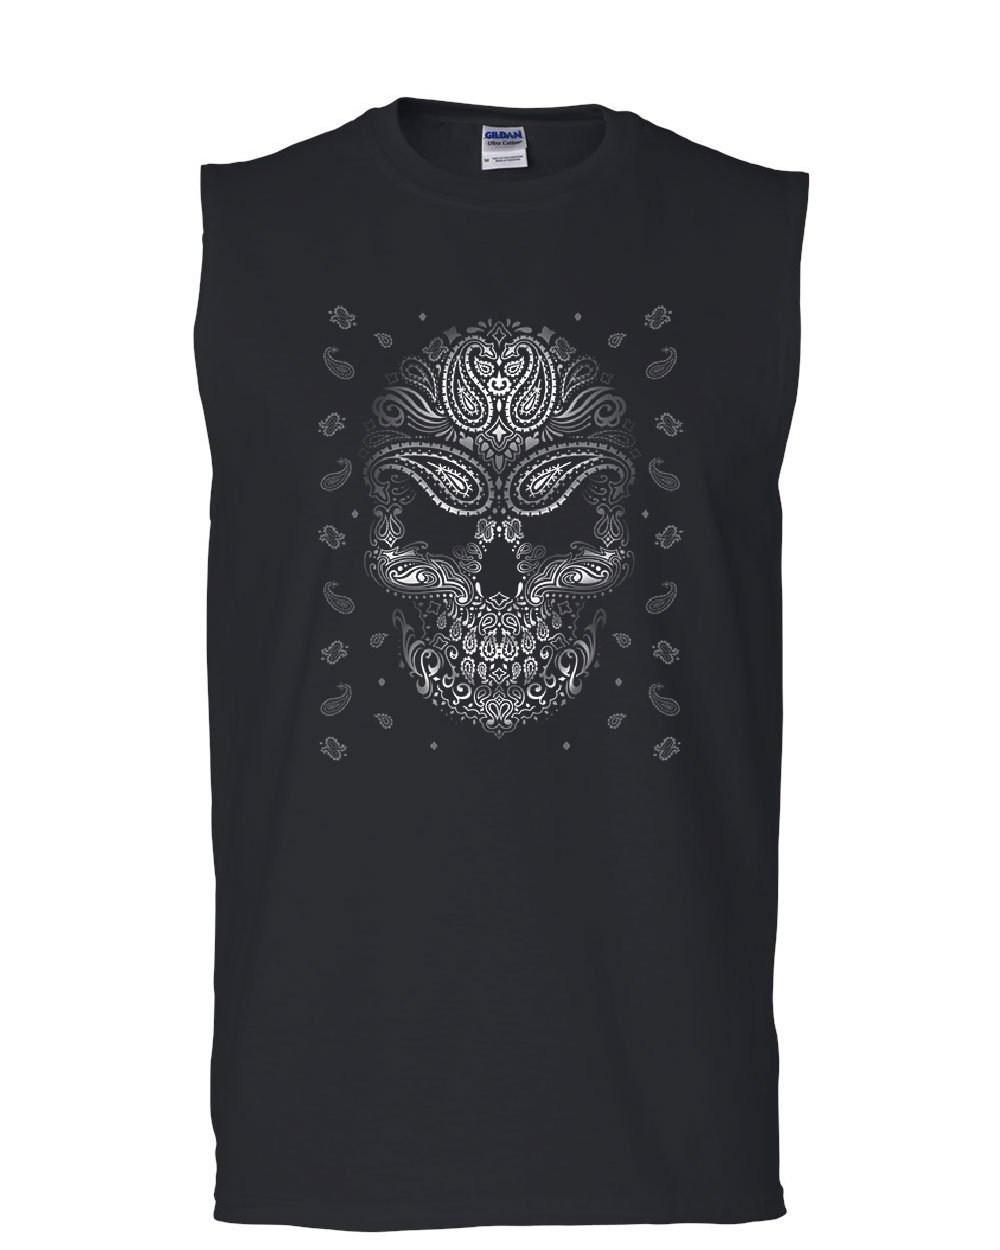 Tee Hunt Bandana Skull Face Muscle Shirt Gangsta Badass Swag Urban Skeleton Sleeveless 